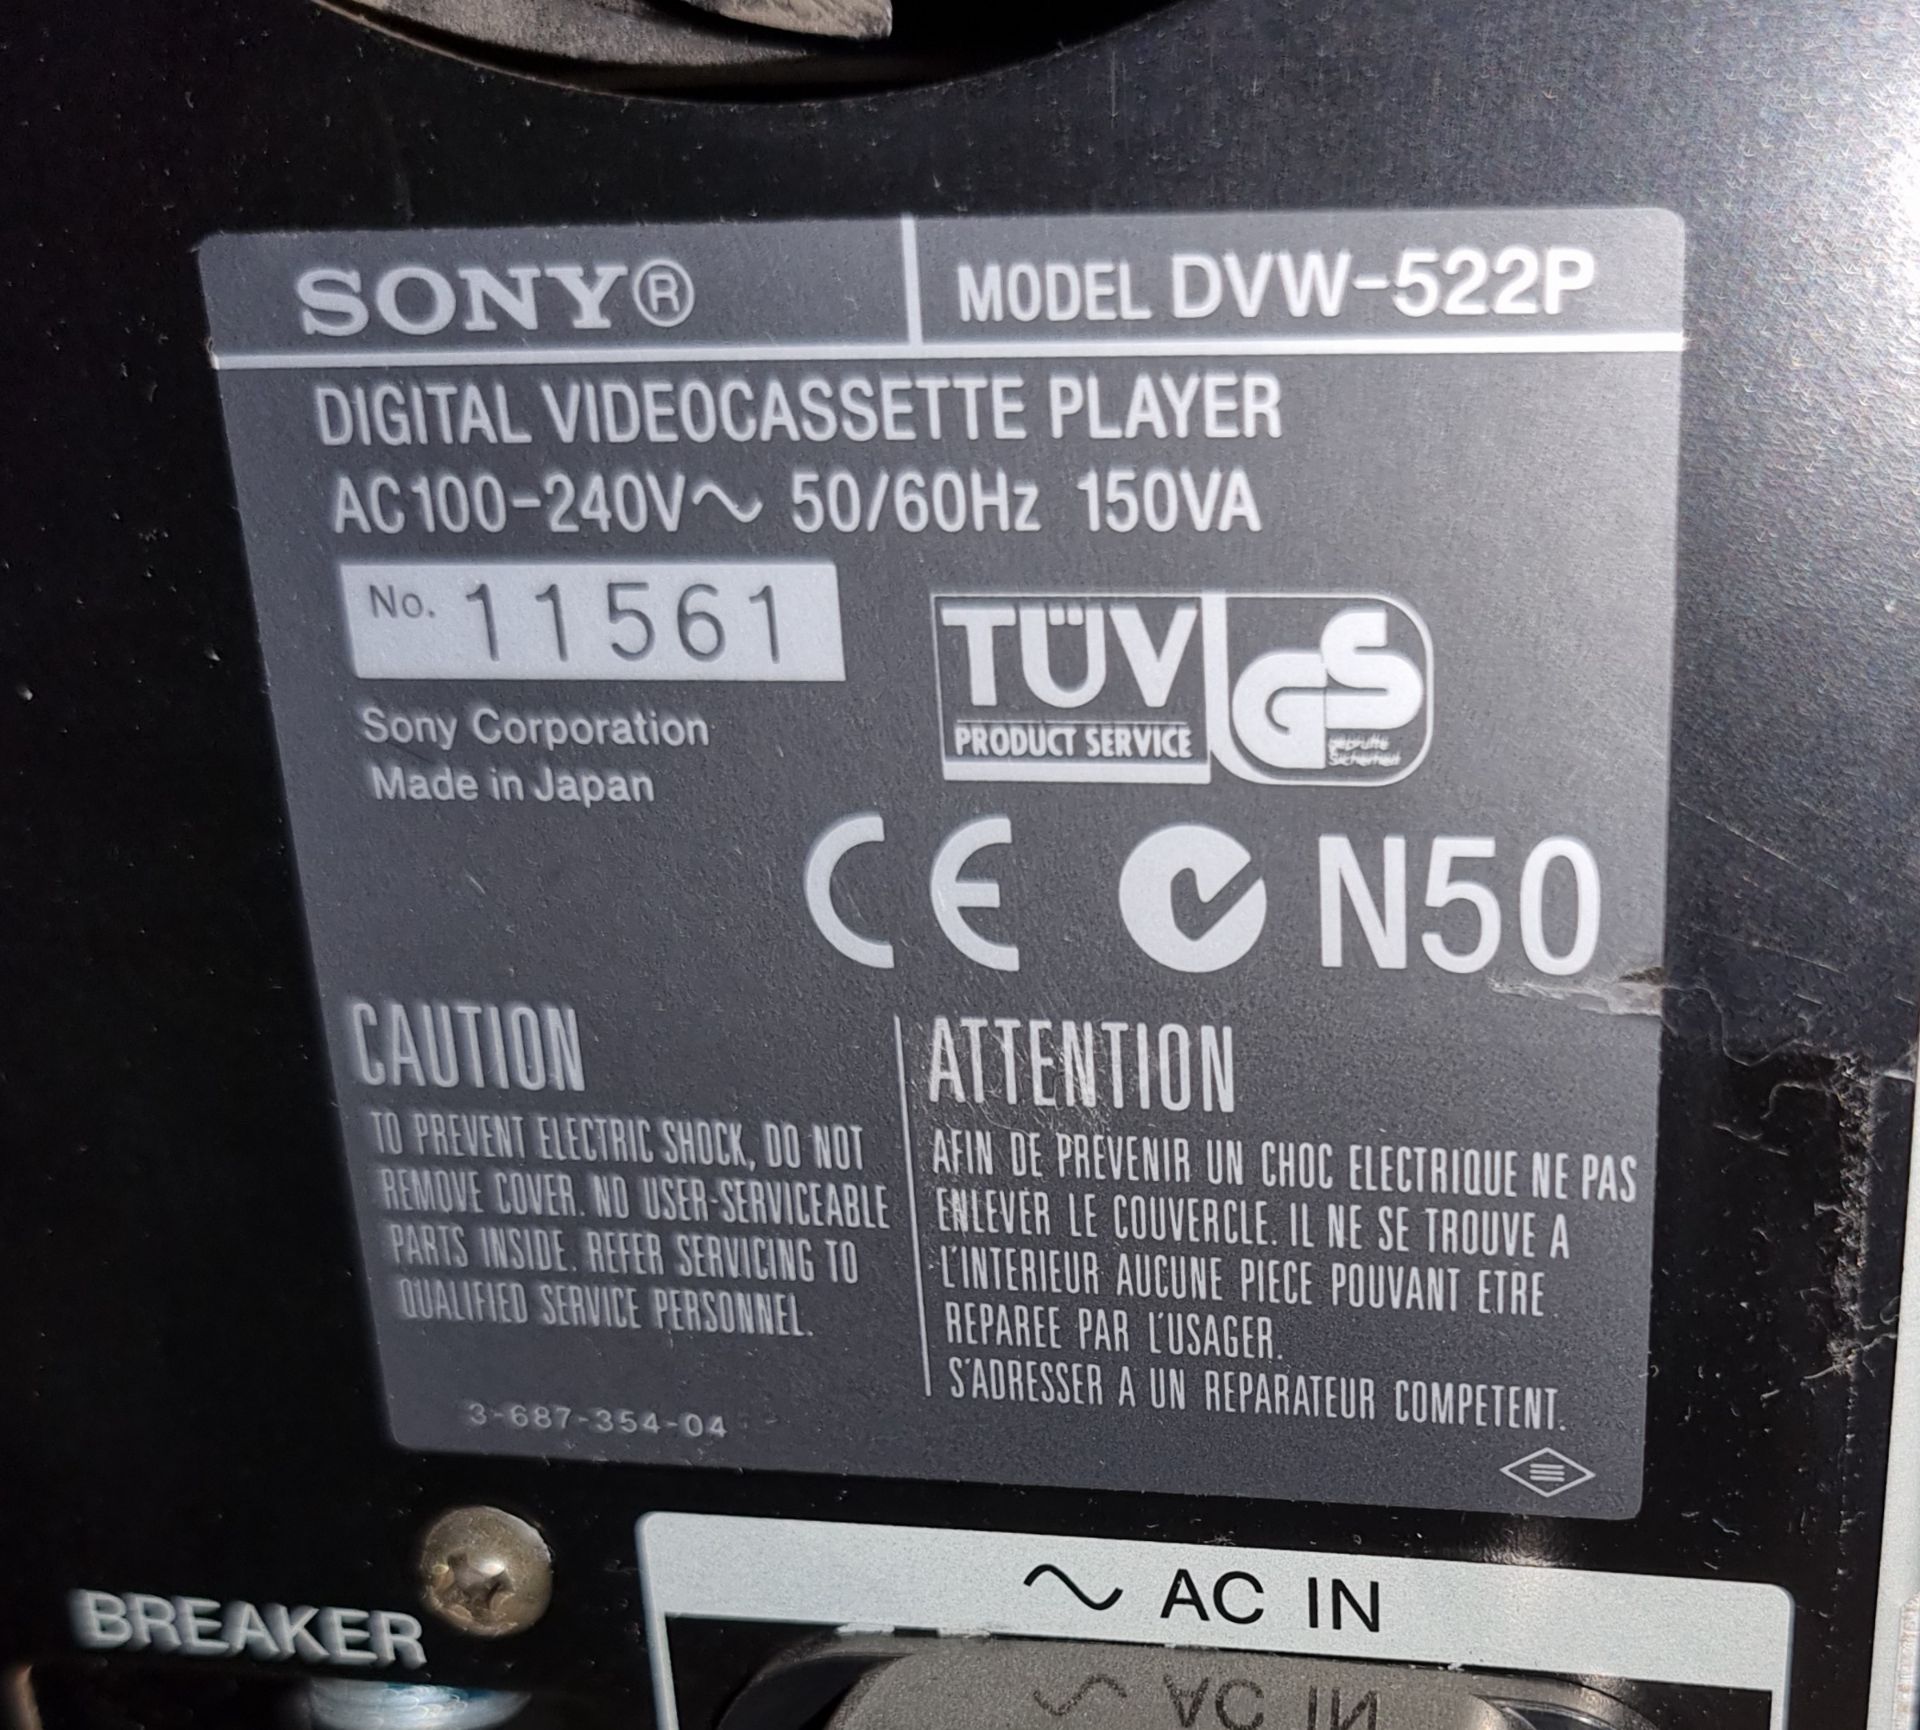 Sony DVW-A510P Digital video cassette player, Sony DVW-522P Digital video cassette player - Image 7 of 8